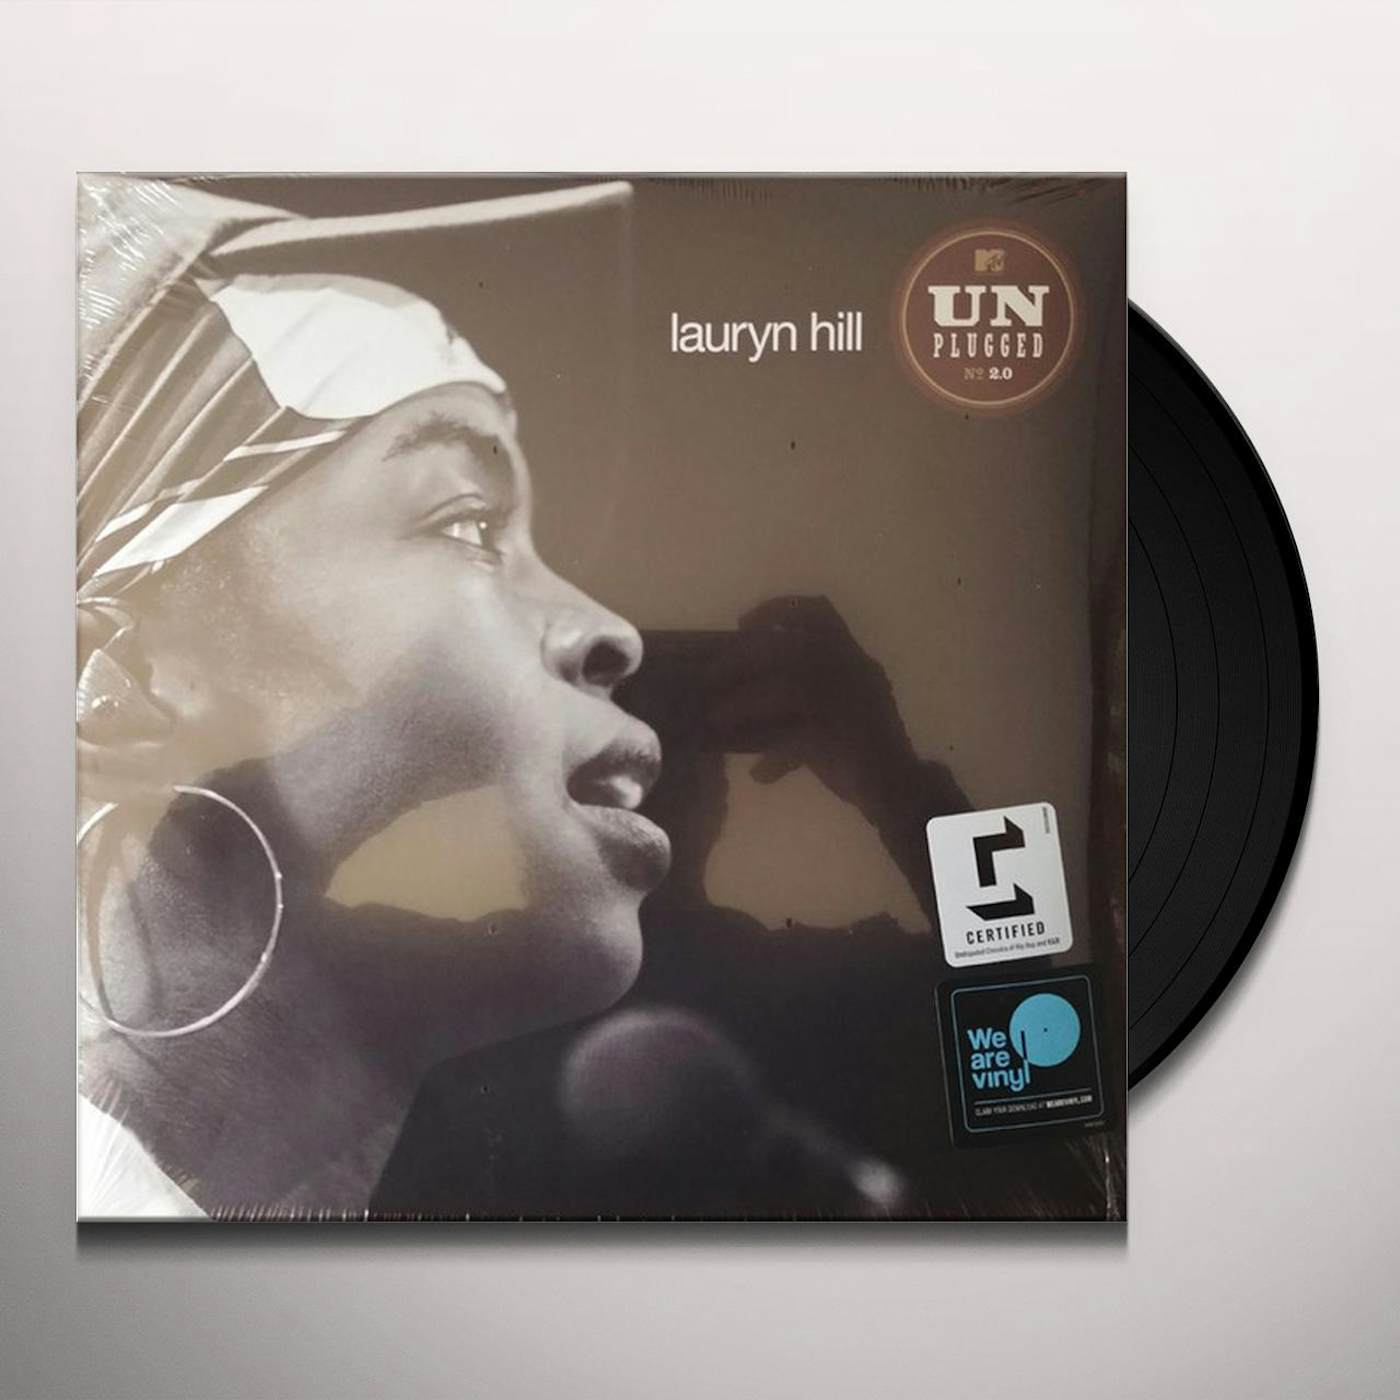 Lauryn Hill Mtv Unplugged No 2.0 Vinyl Record